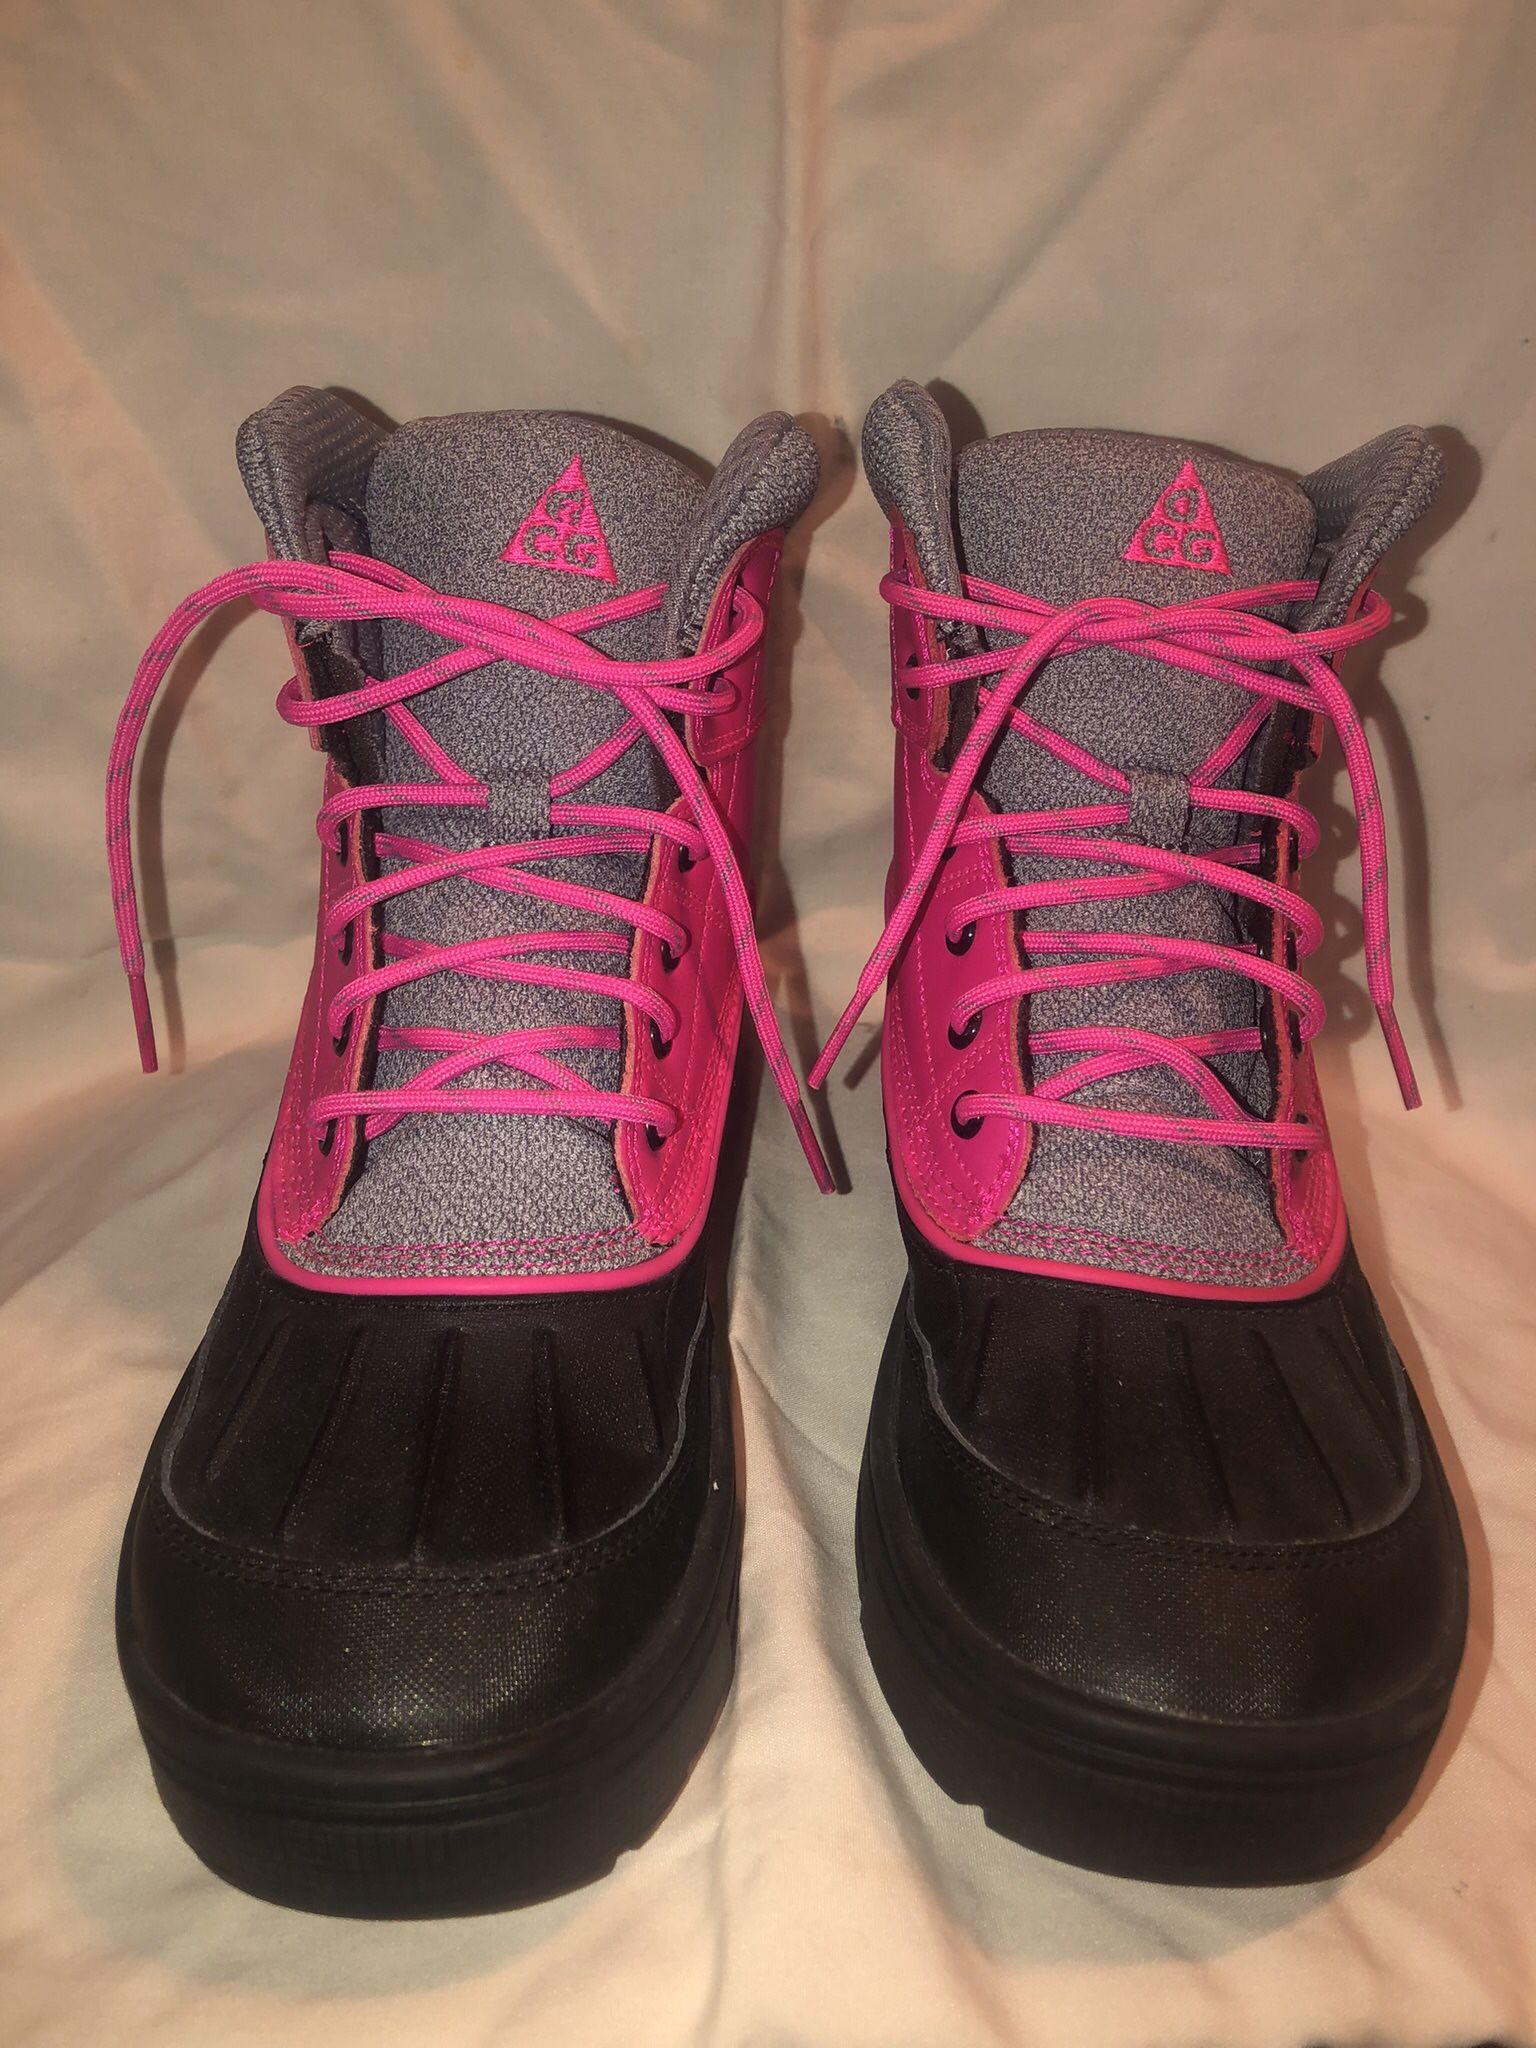 Nwob Nike Acg Woodside Boots